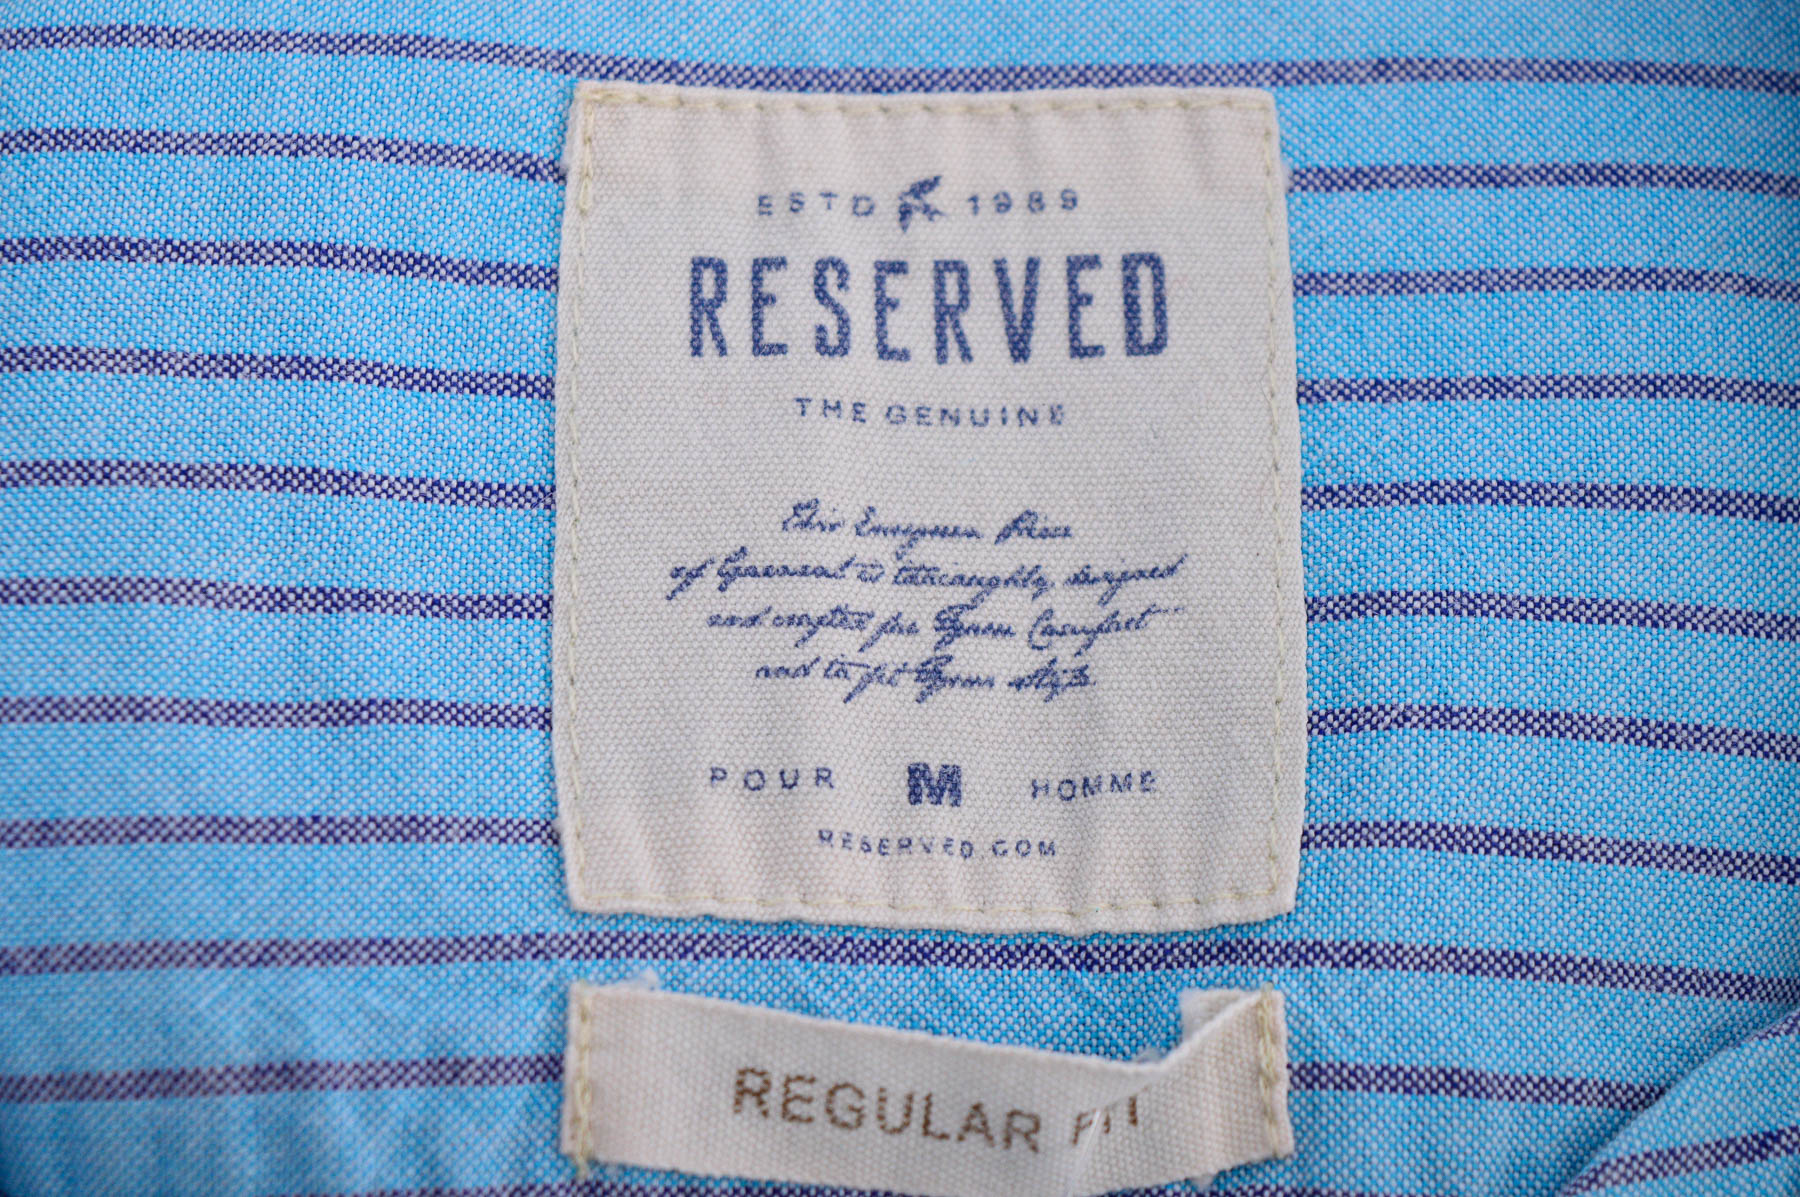 Men's shirt - RESERVED - 2